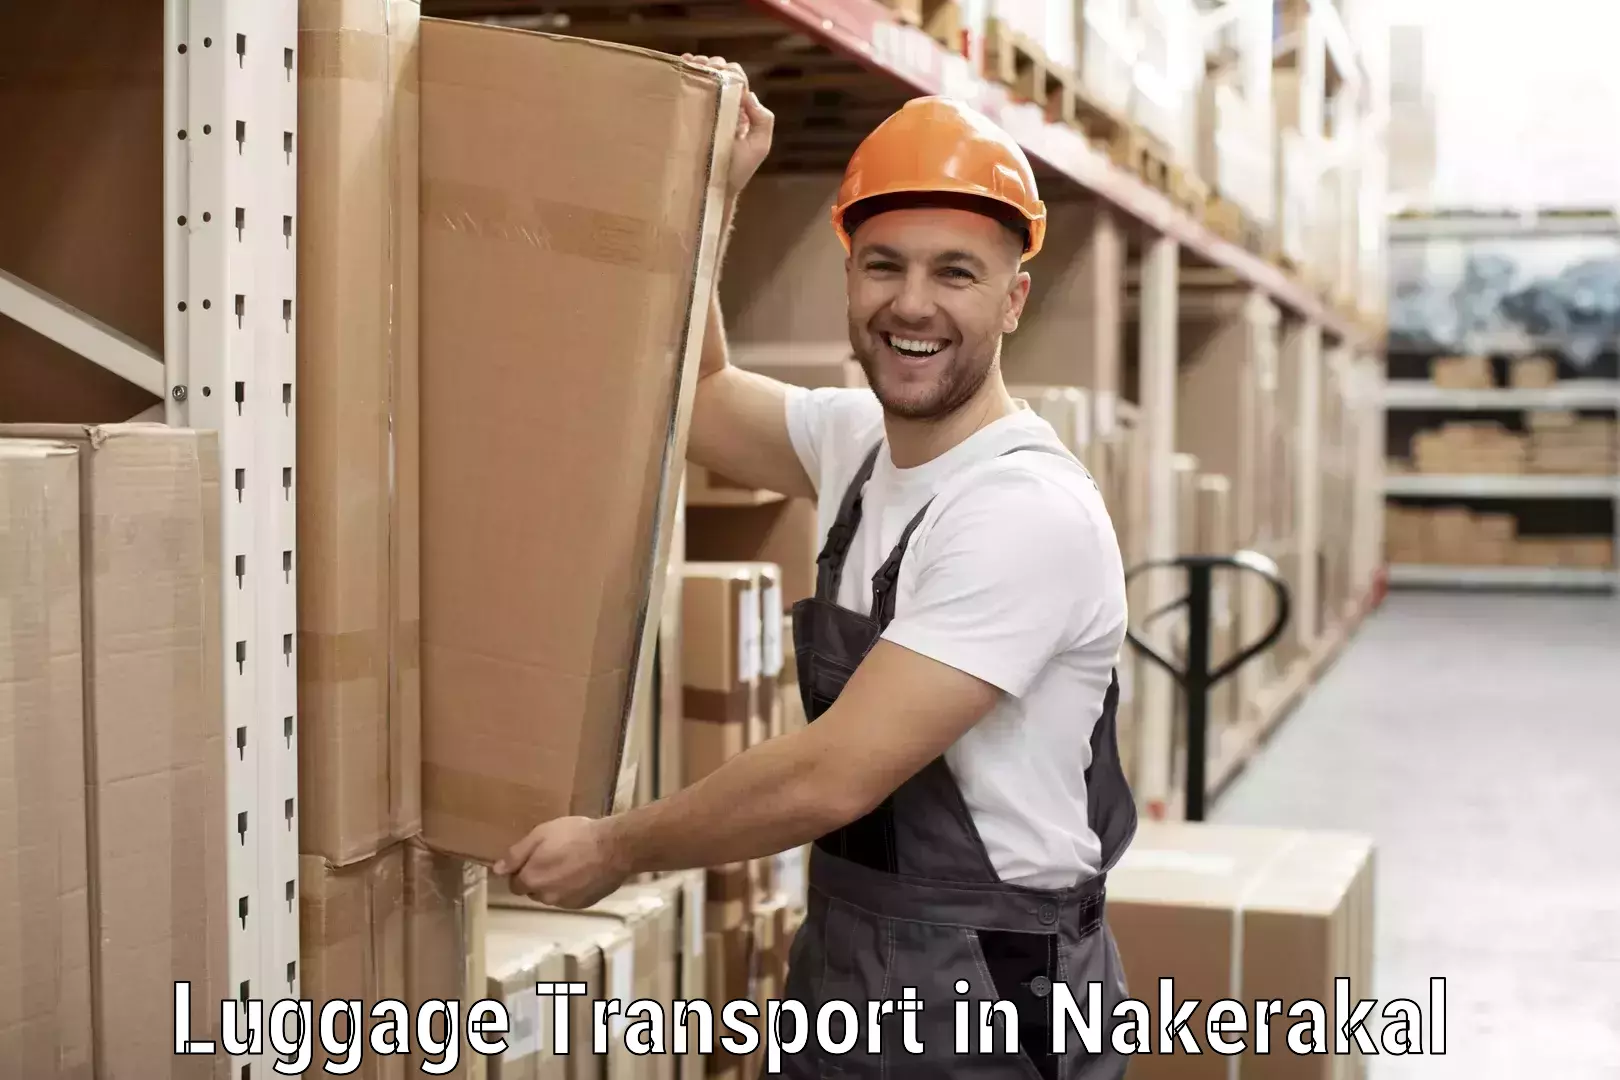 Luggage transport deals in Nakerakal